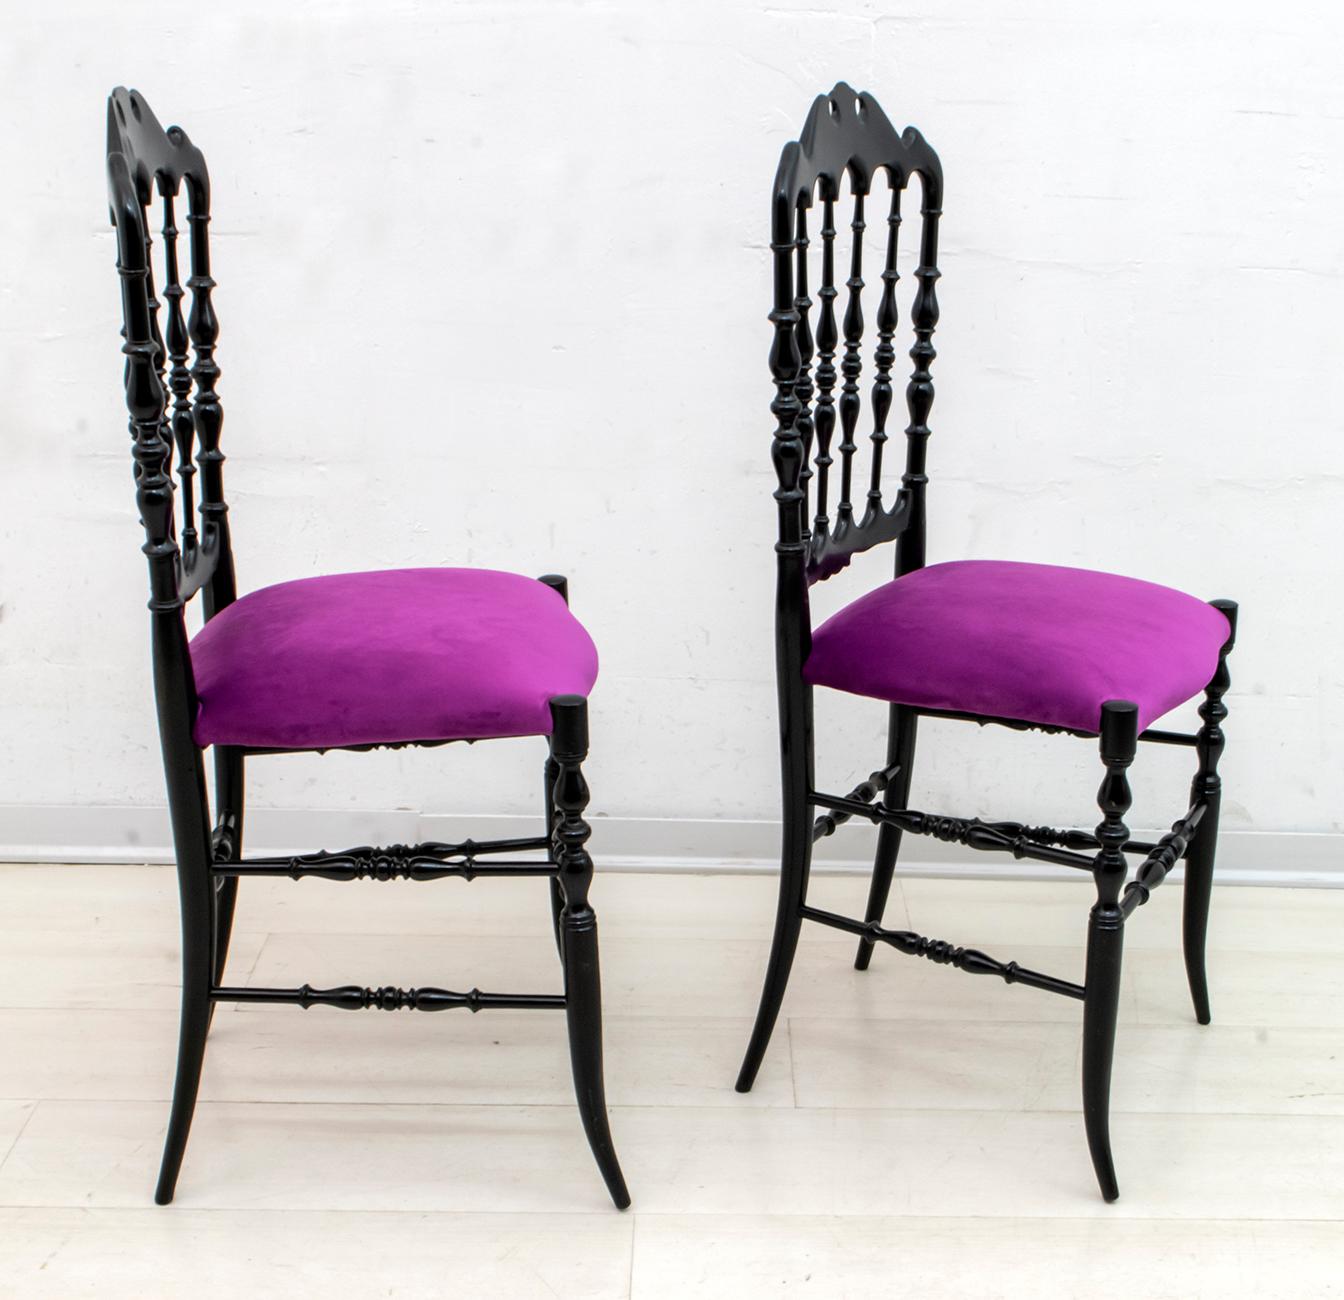 Pair of Giuseppe Gaetano Descalzi Midcentury Italian Chiavari Chairs, 1950s For Sale 1